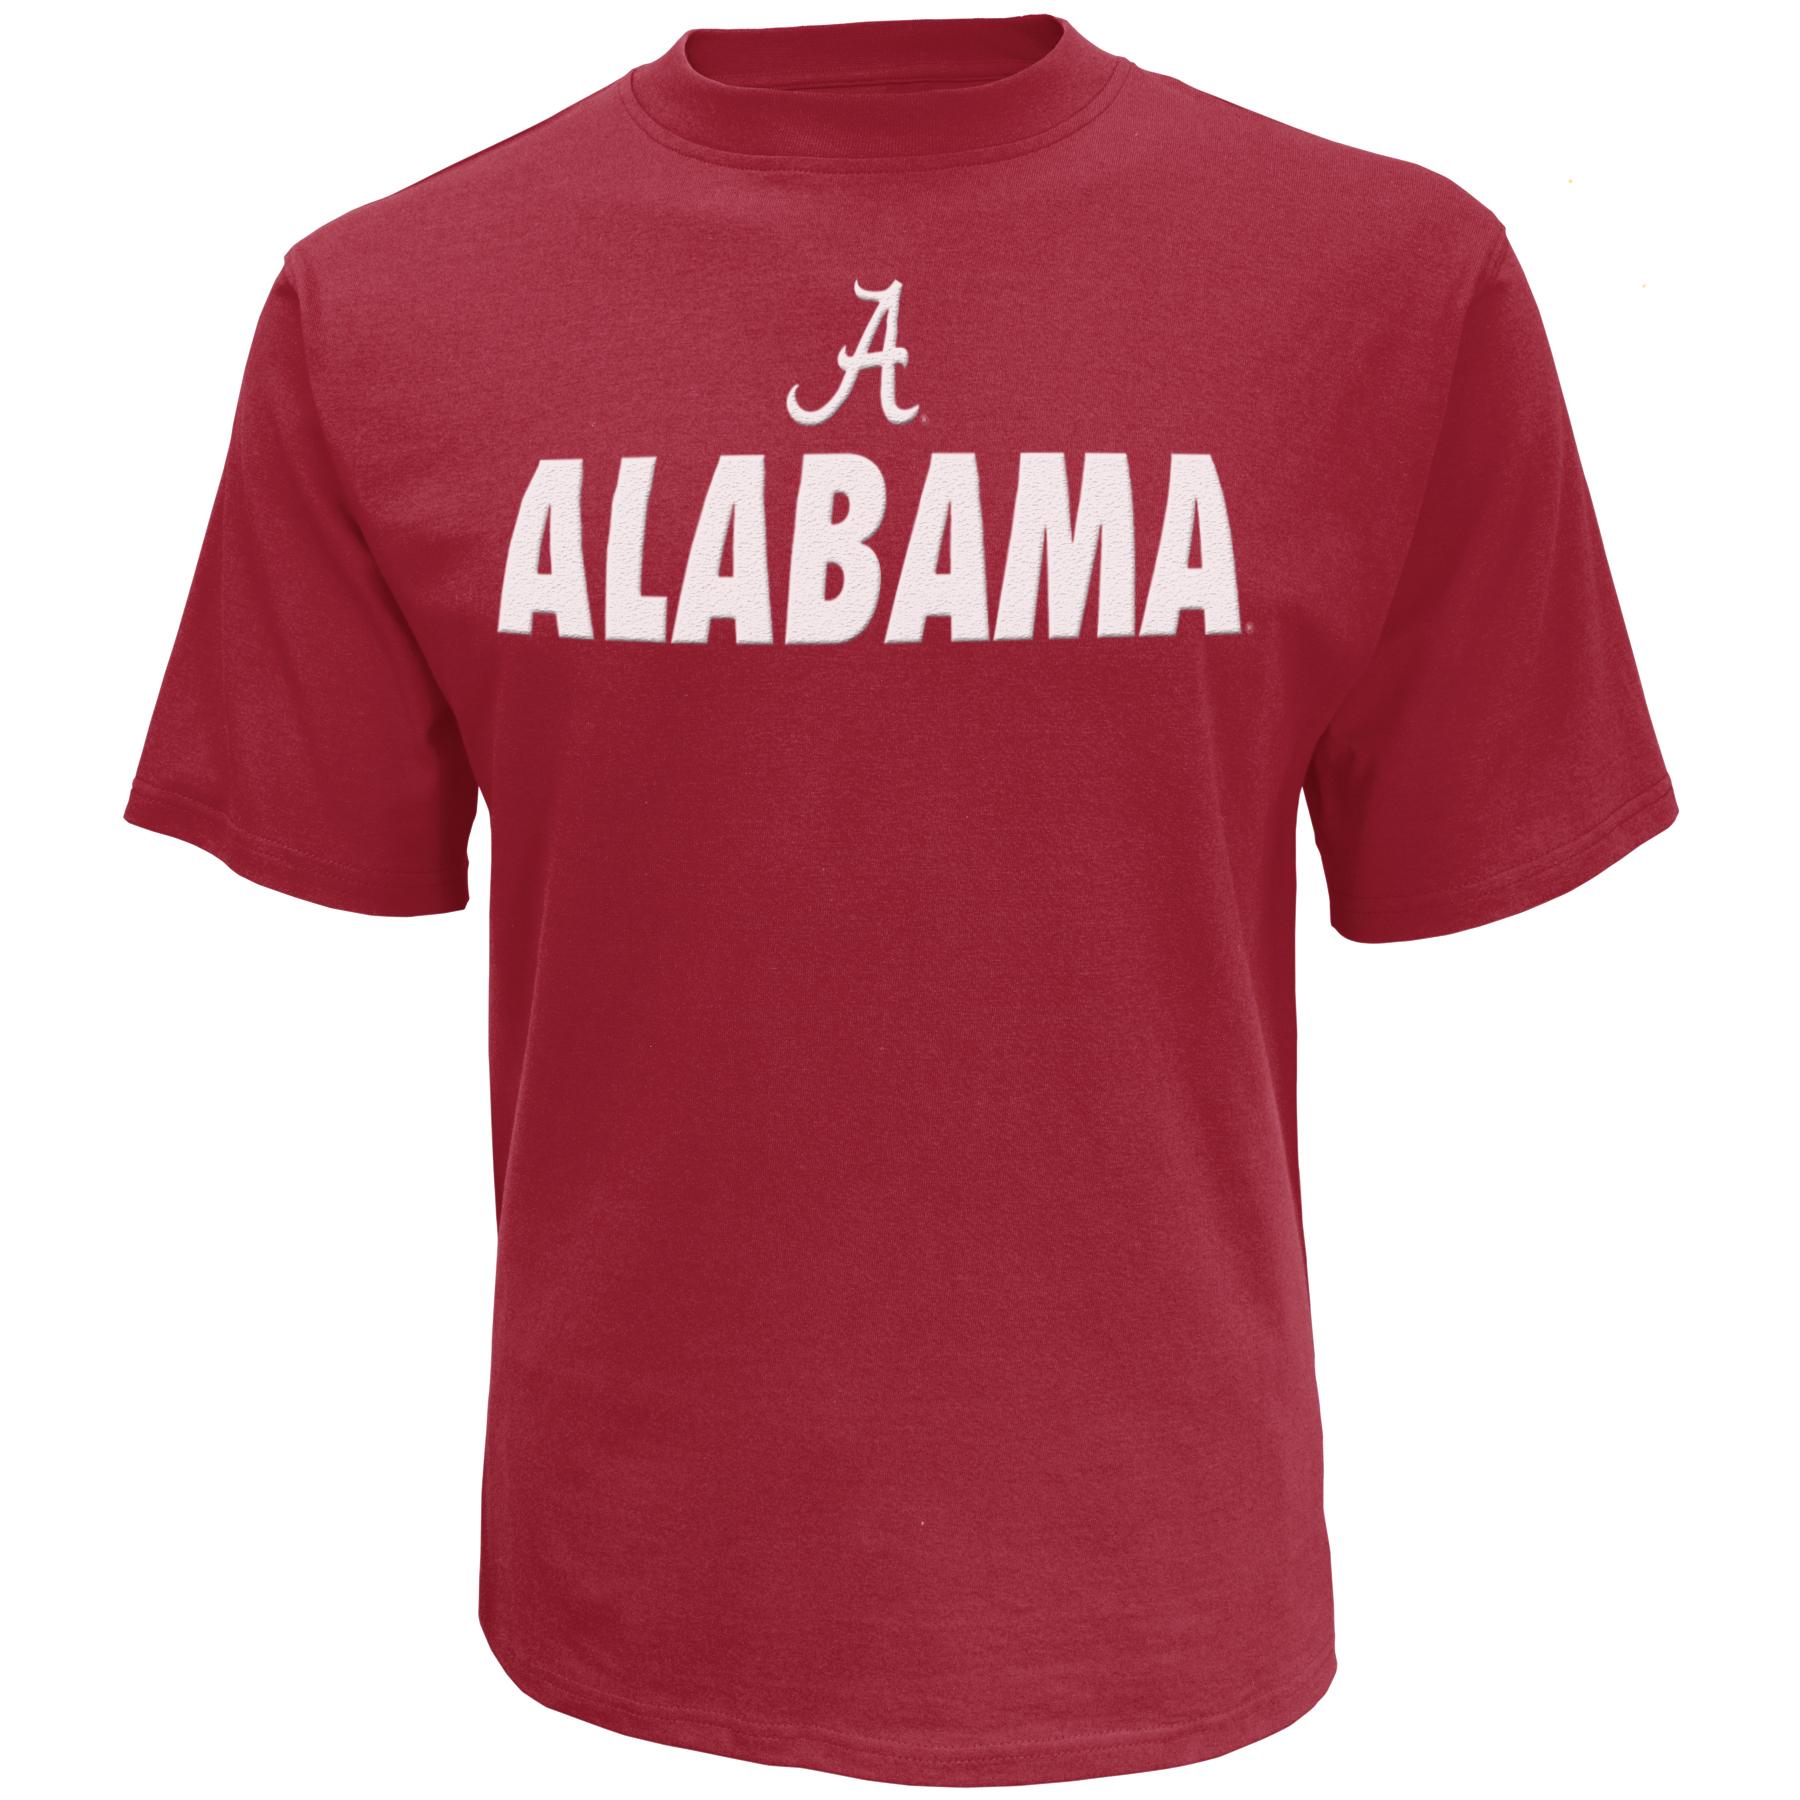 NCAA Men's Embroidered Graphic T-Shirt - Alabama Crimson Tide